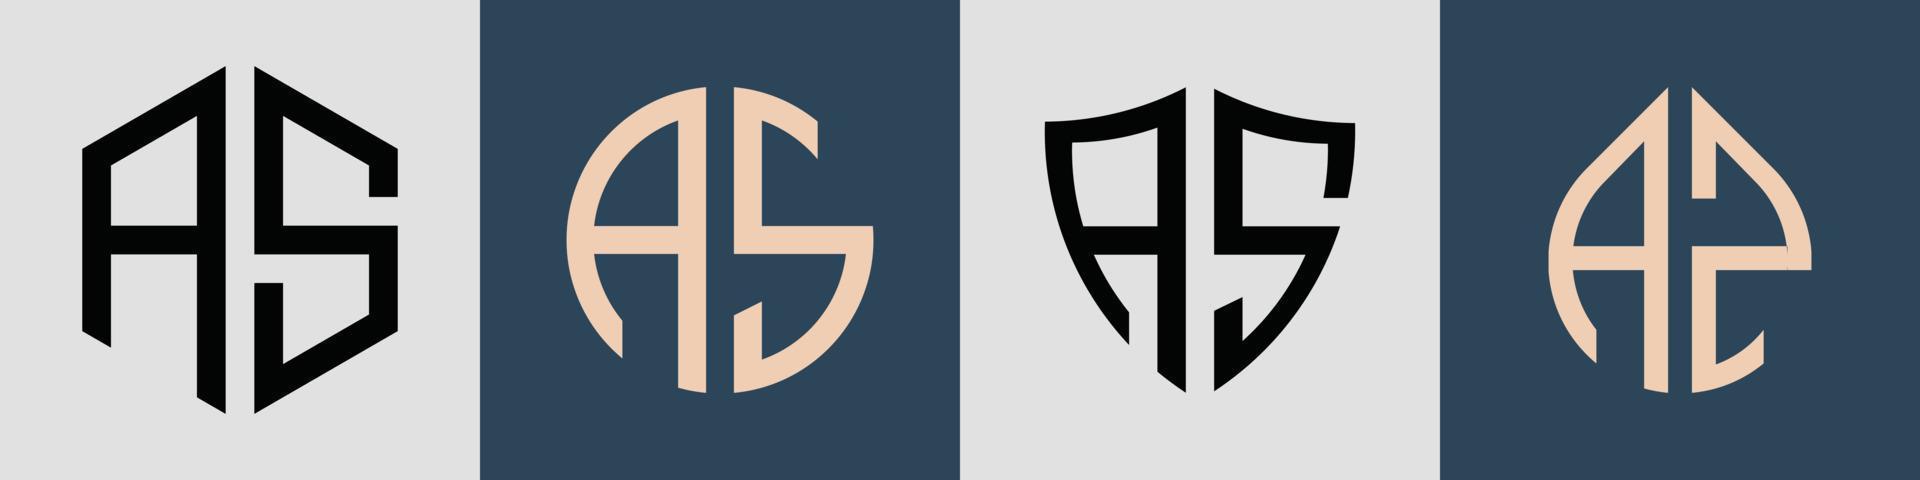 kreative einfache anfangsbuchstaben als logo-designs bündeln. vektor